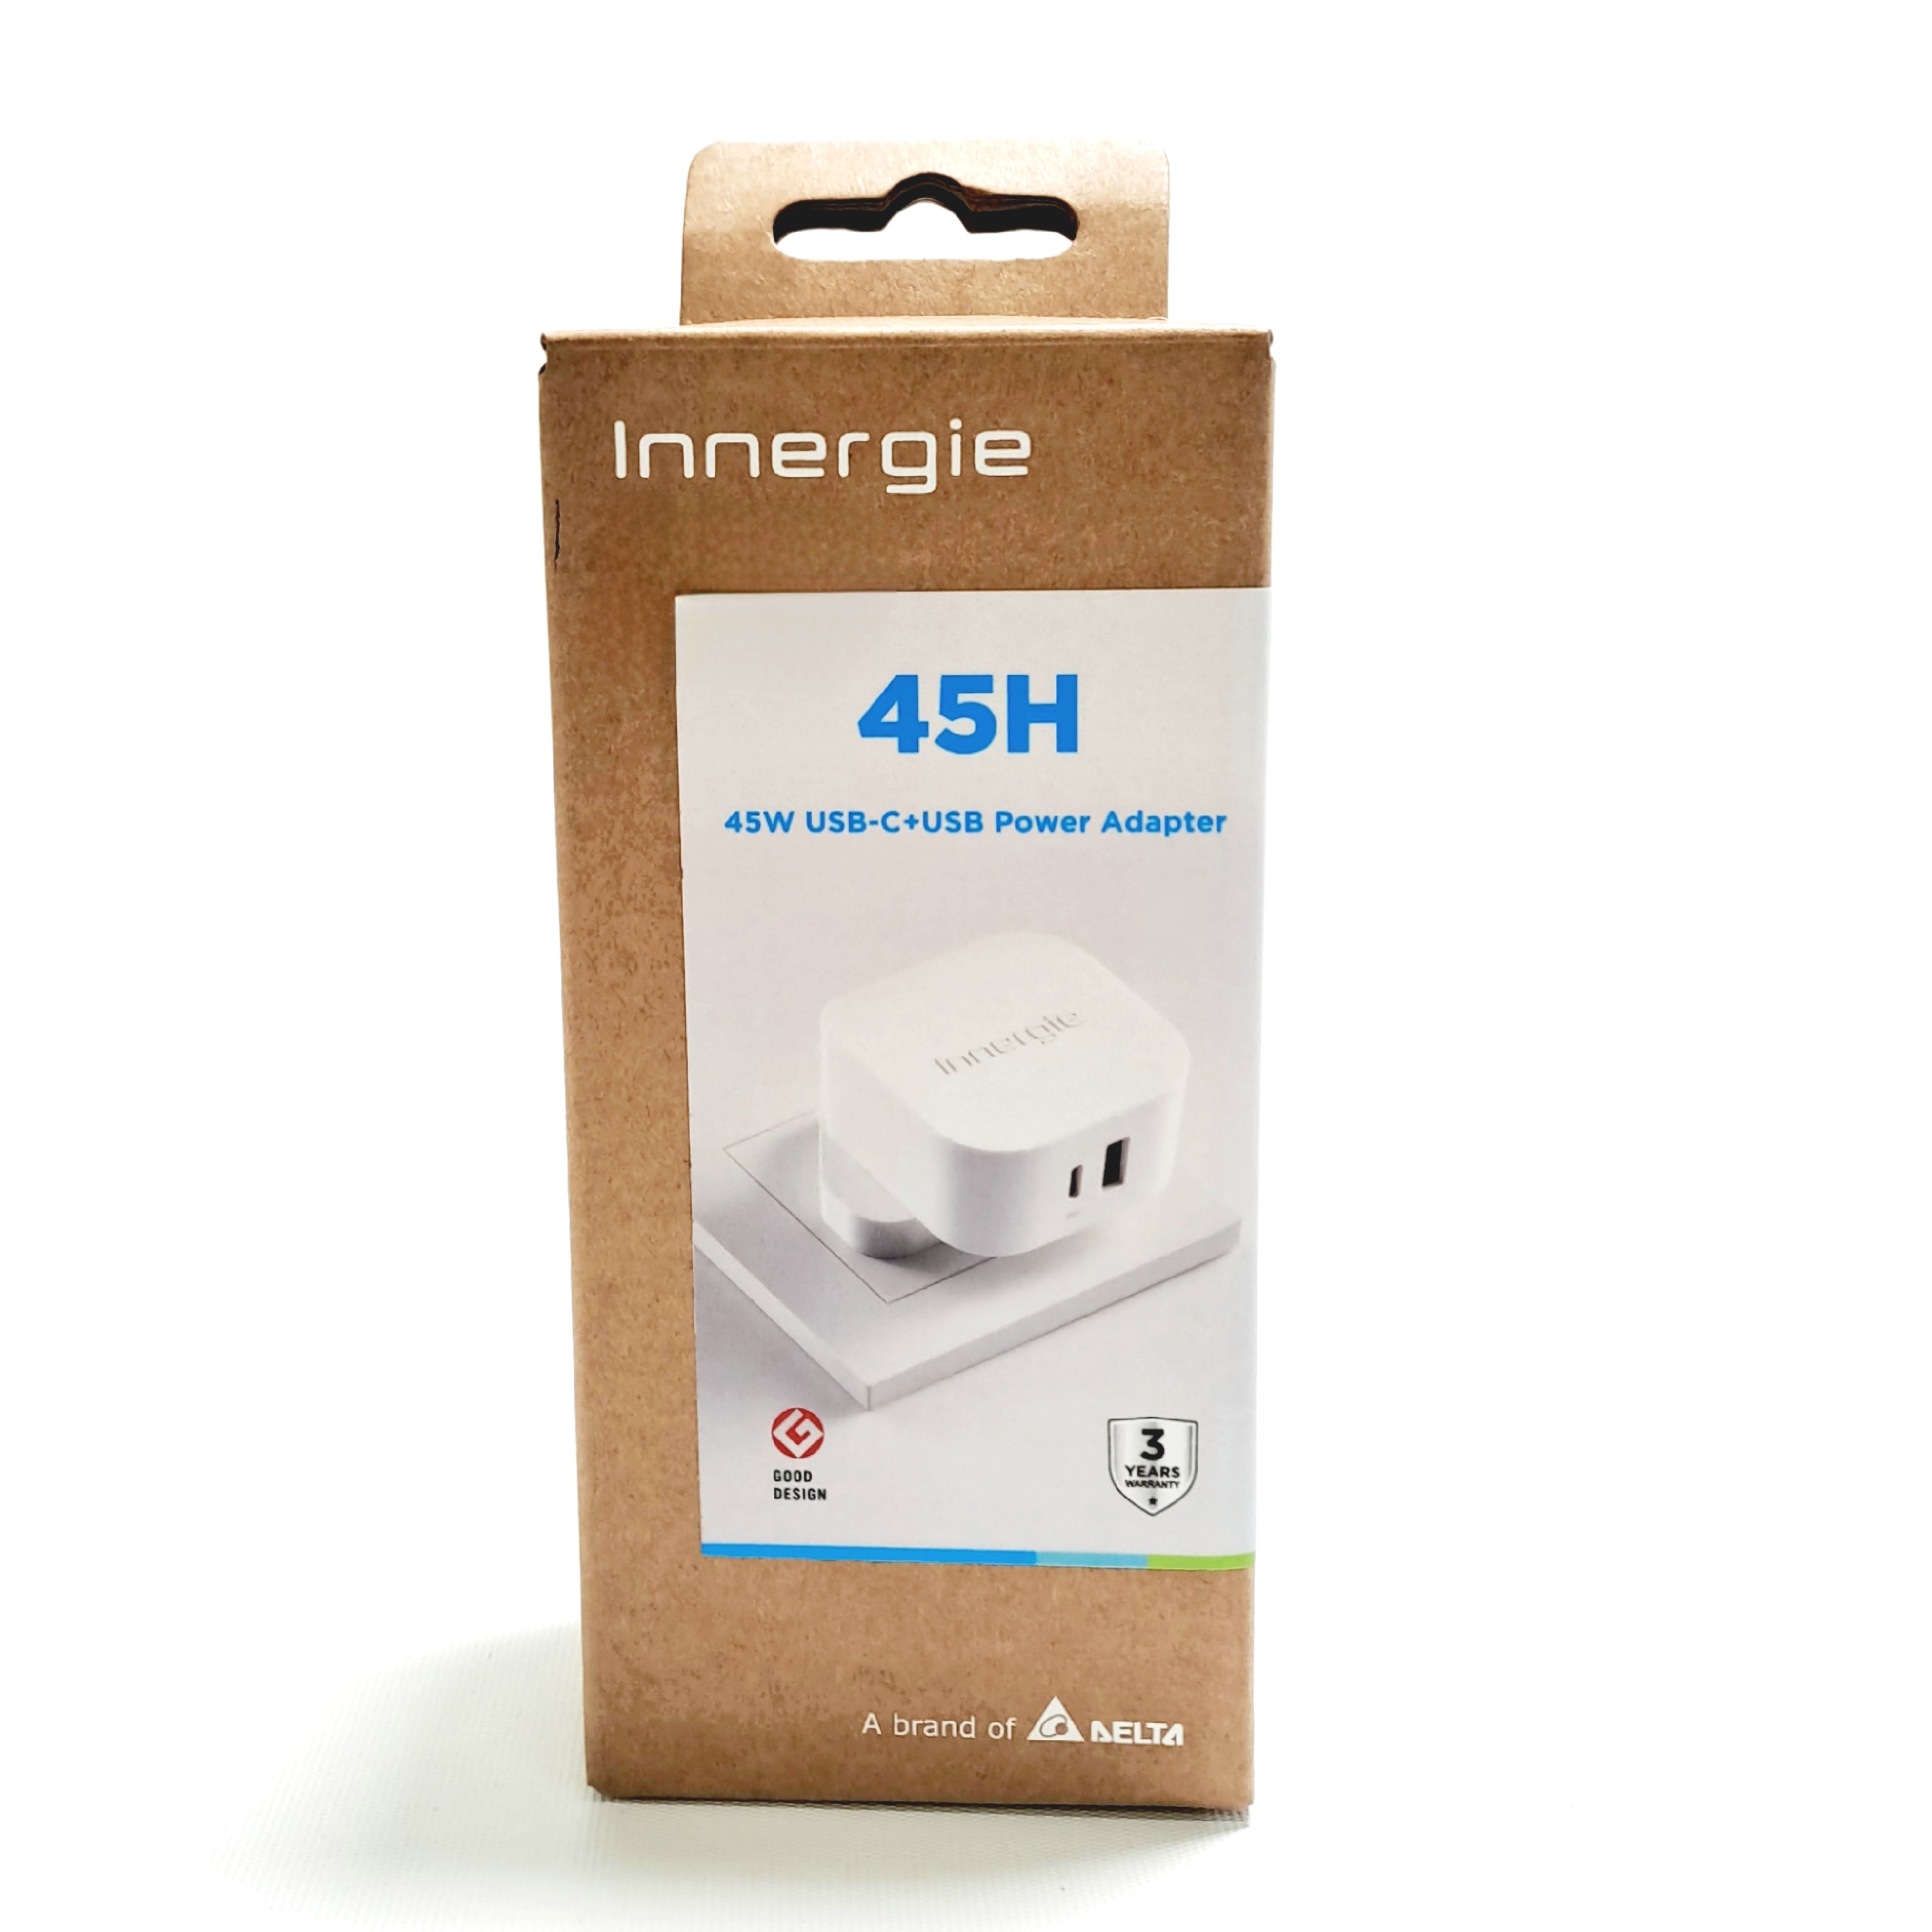 Innergie 45H (UK) USB-C PD Adapter 